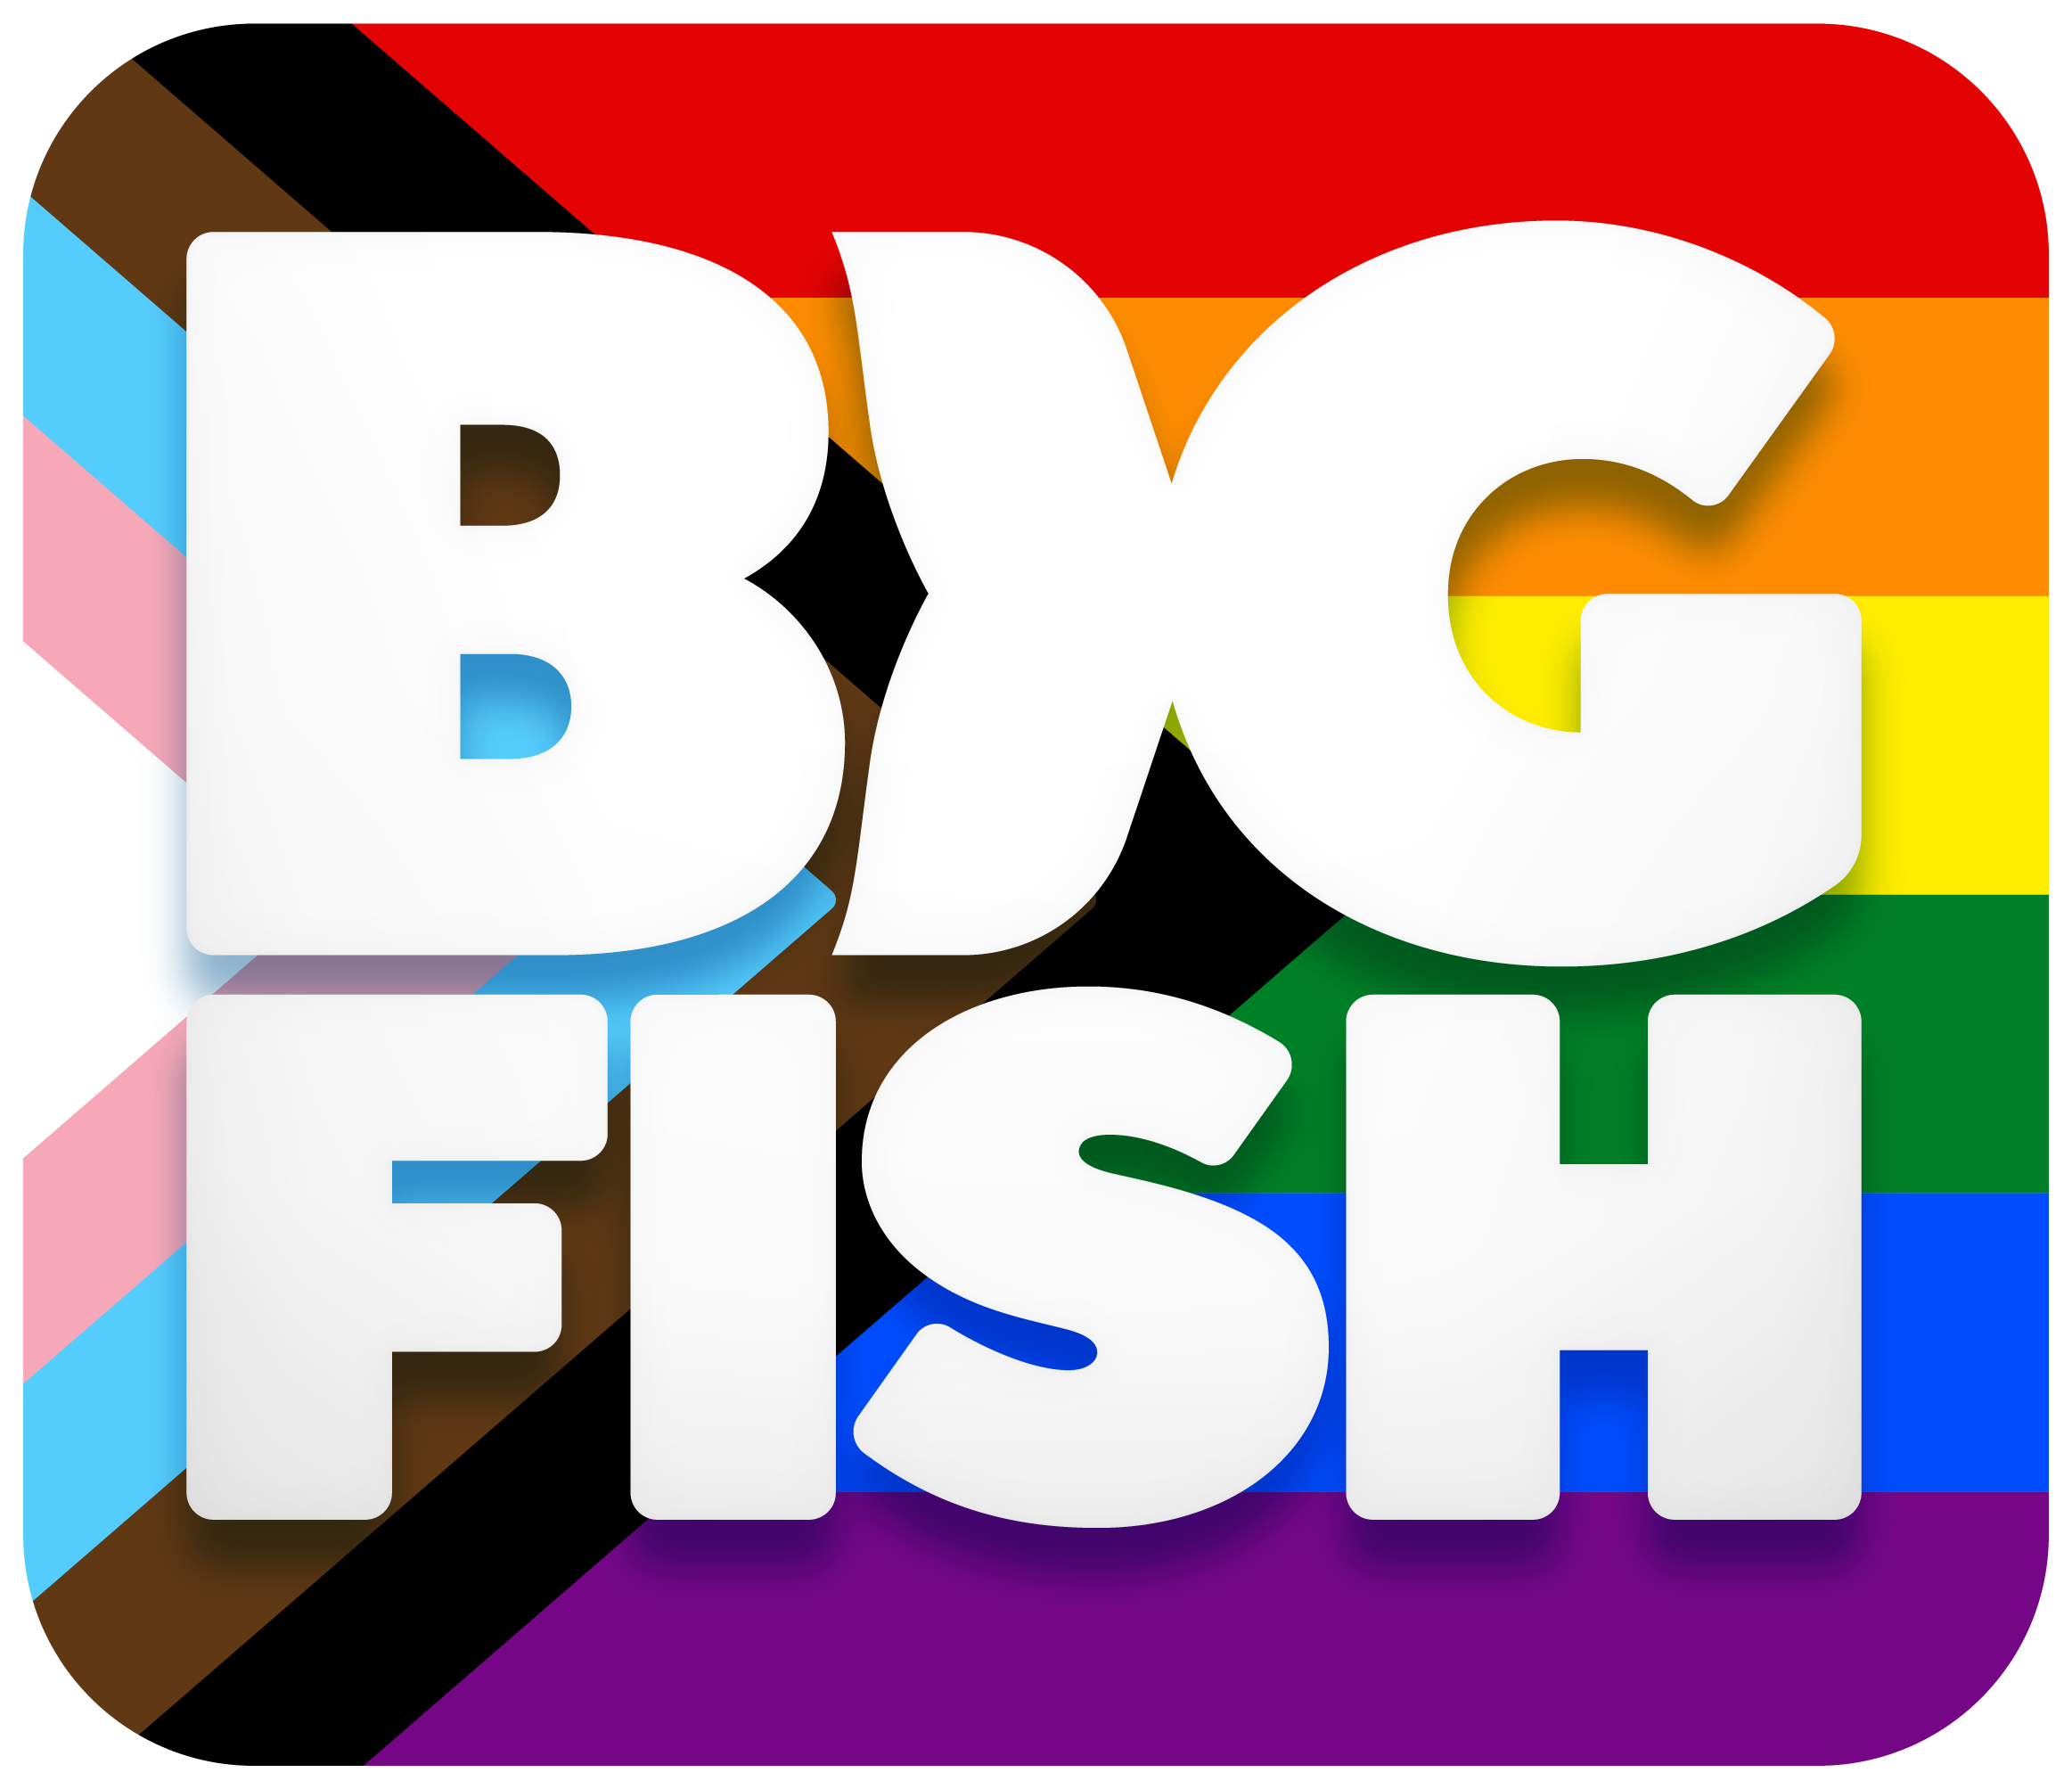 BFG Pride Logo v01